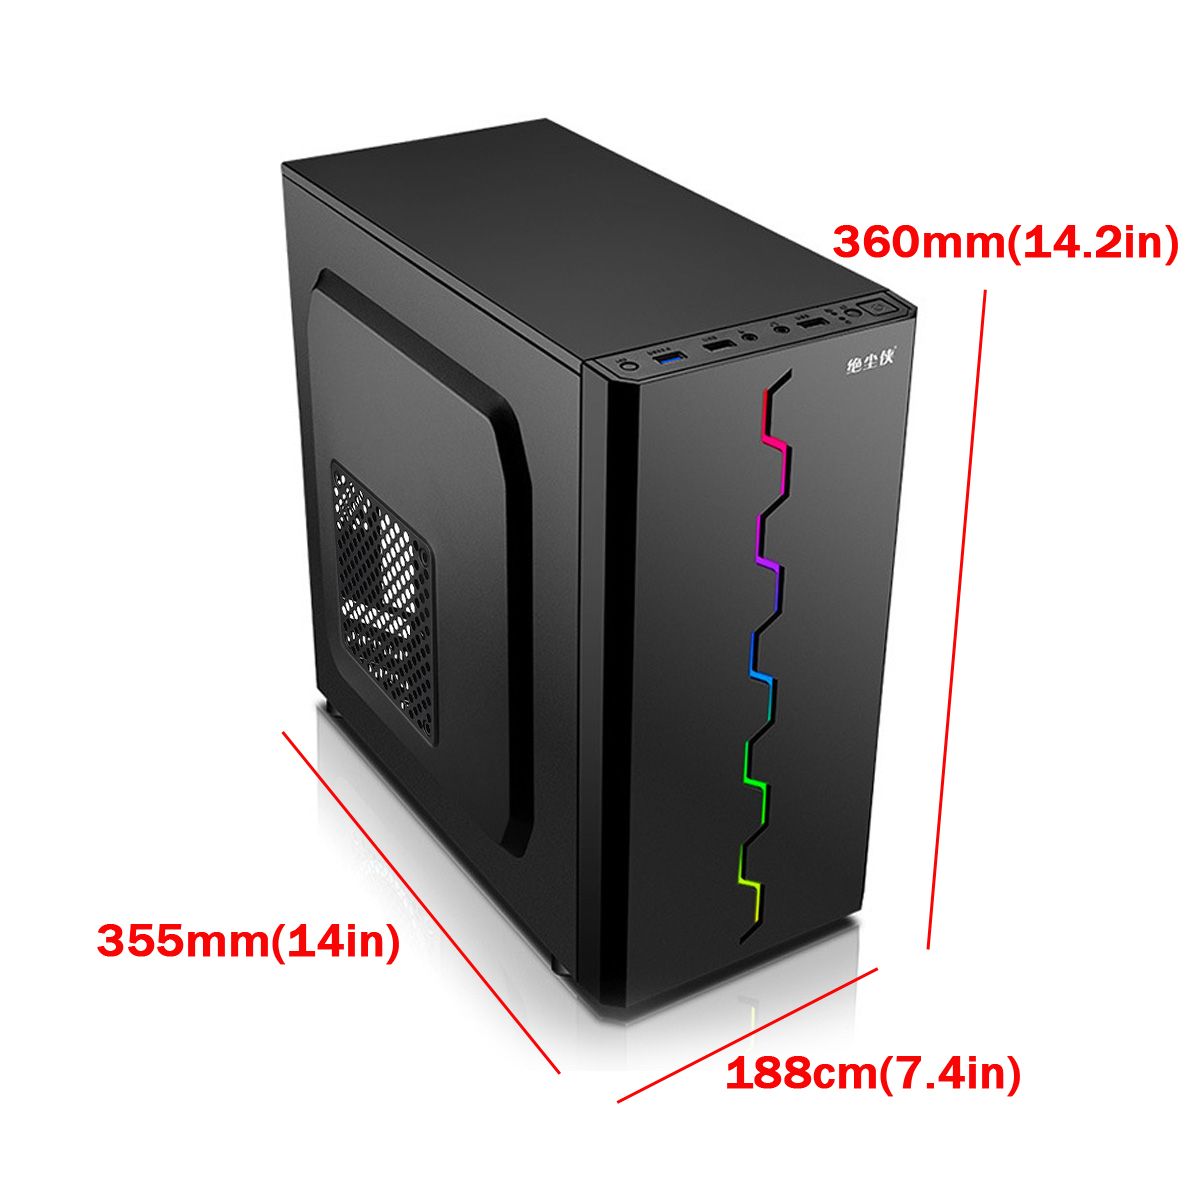 Mini-Desktop-Computer-Case-Chassis-PC-Case-USB20-Support-3-120mm-Fans-MATX-MITX-1672739